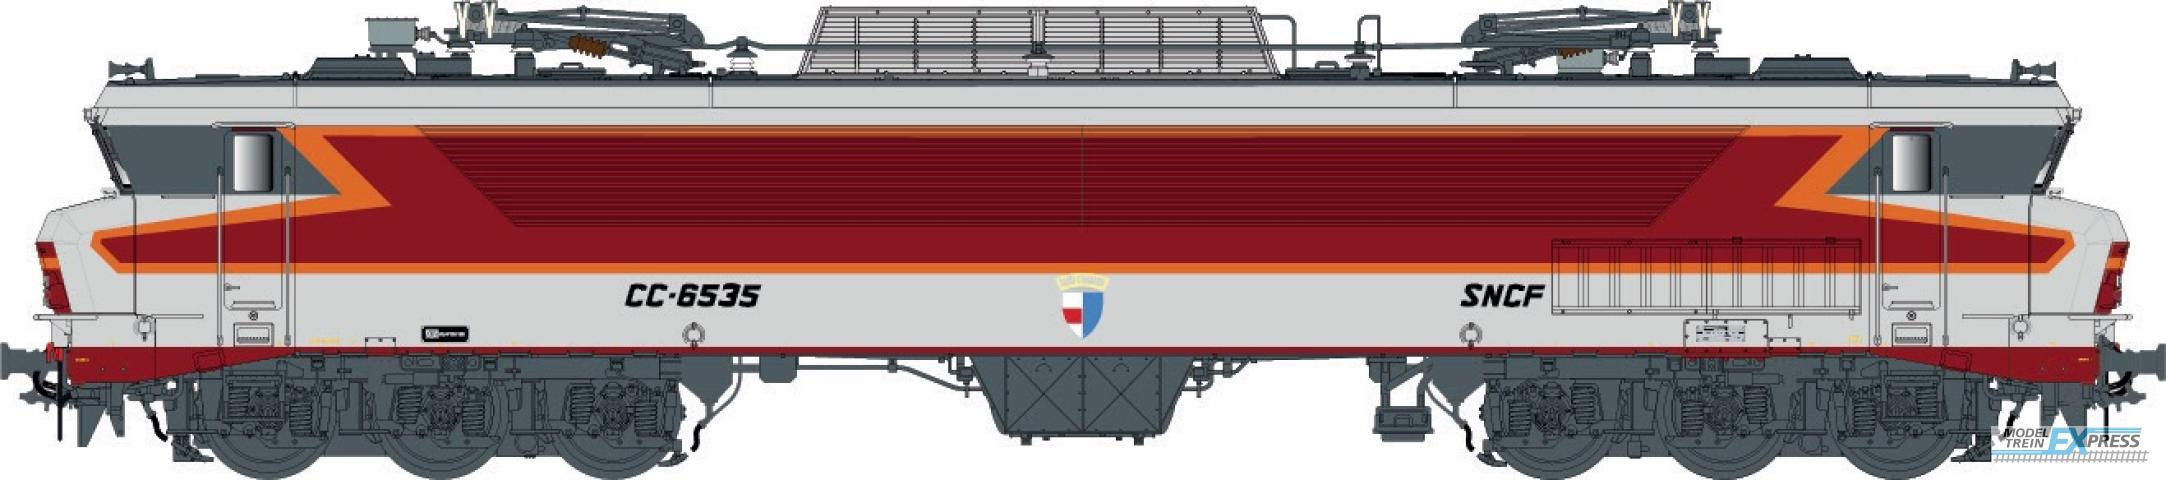 LS Models 10831 CC 6535, greymetalic, livery ARZENS, Lyon Mouche depot, 200 Km/h  /  Ep. IV  /  SNCF  /  HO  /  AC  /  1 P.